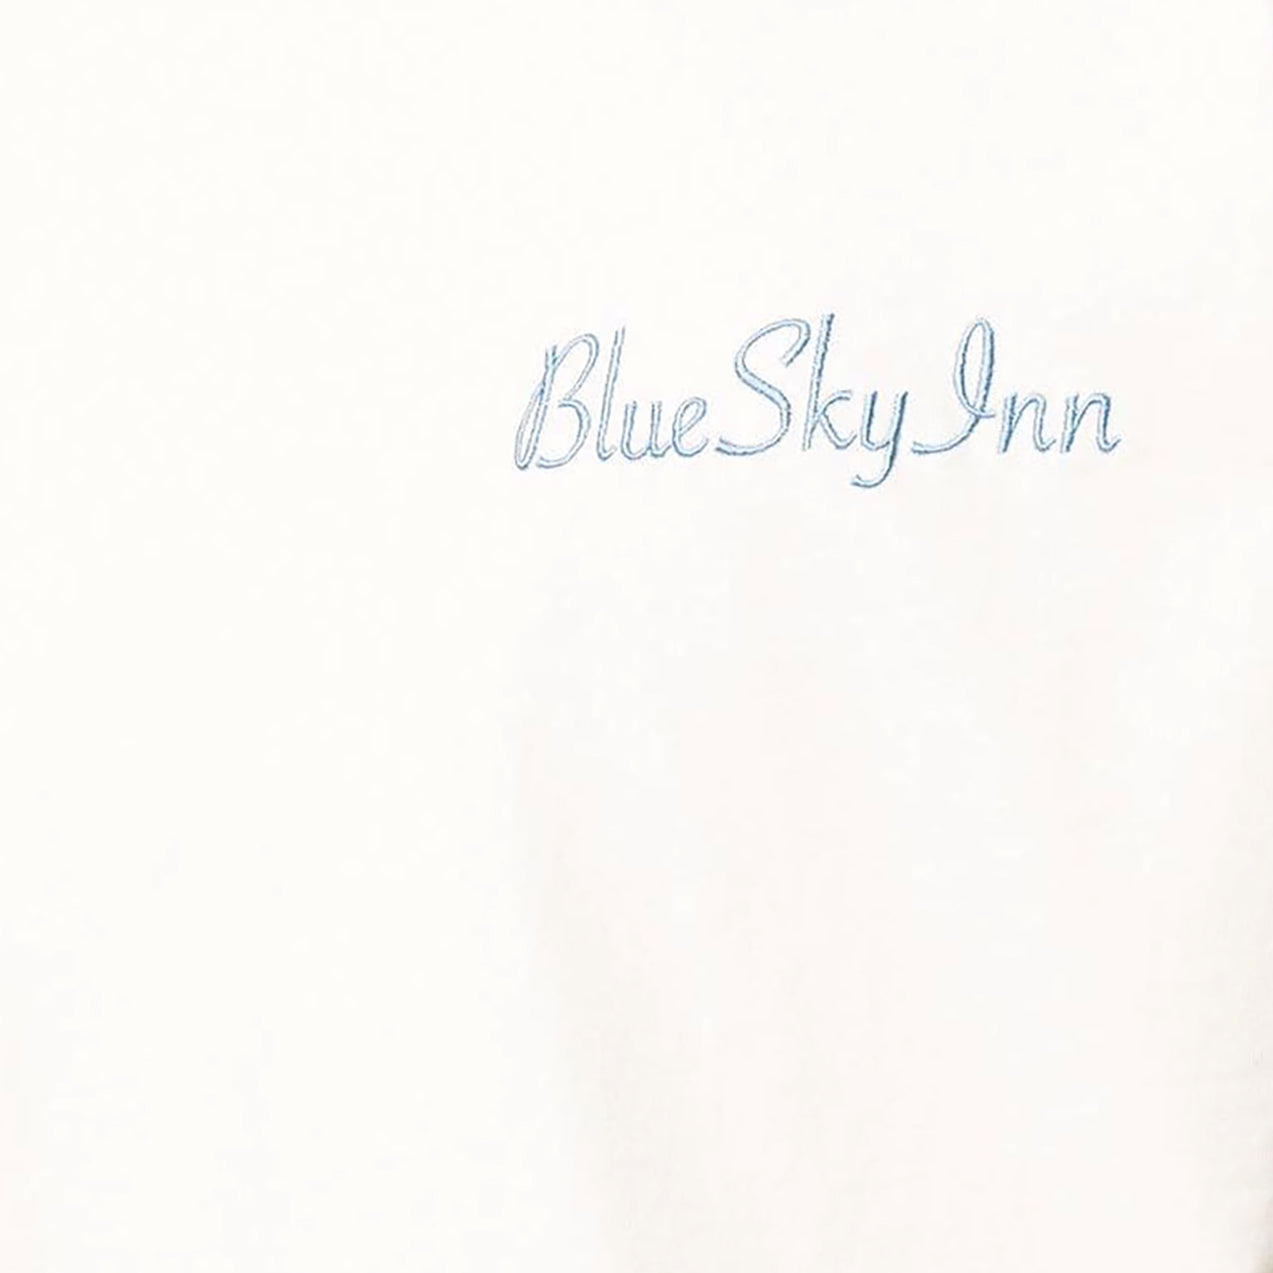 Blue Sky Inn Embroidered Logo T-Shirt